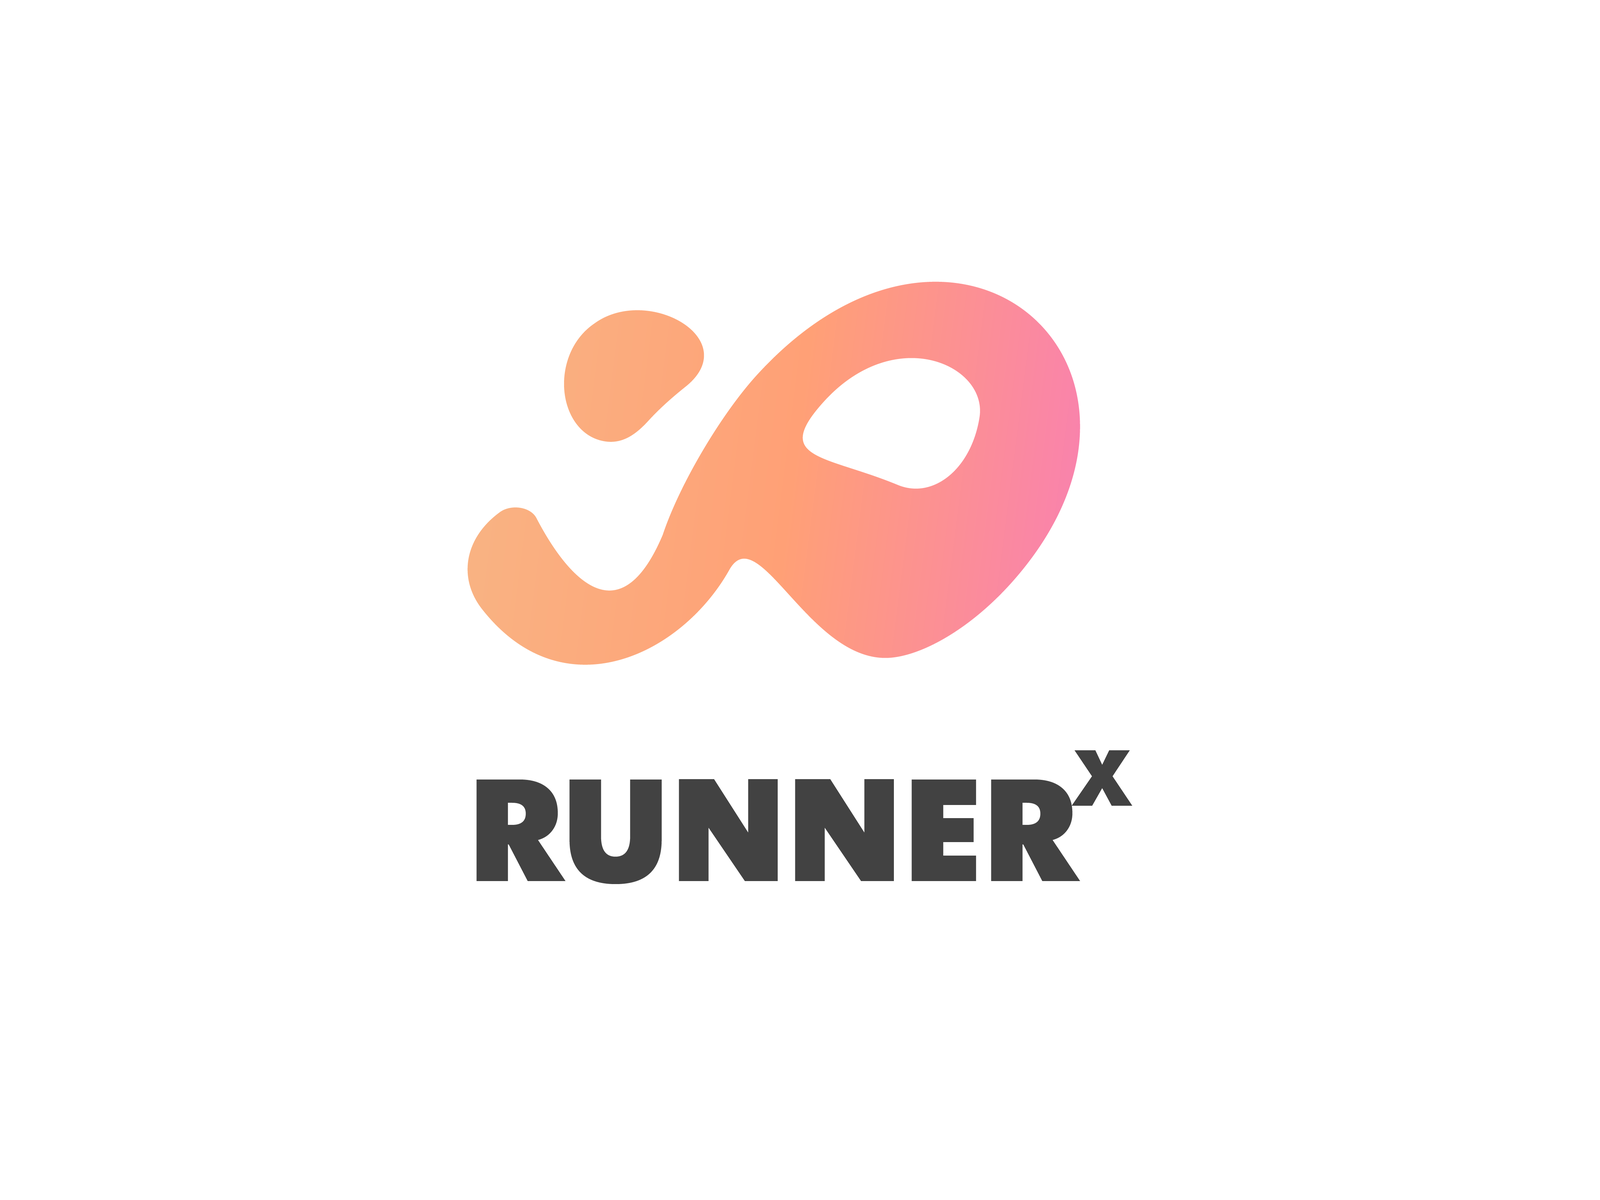 Runner X by Anthony Korol on Dribbble